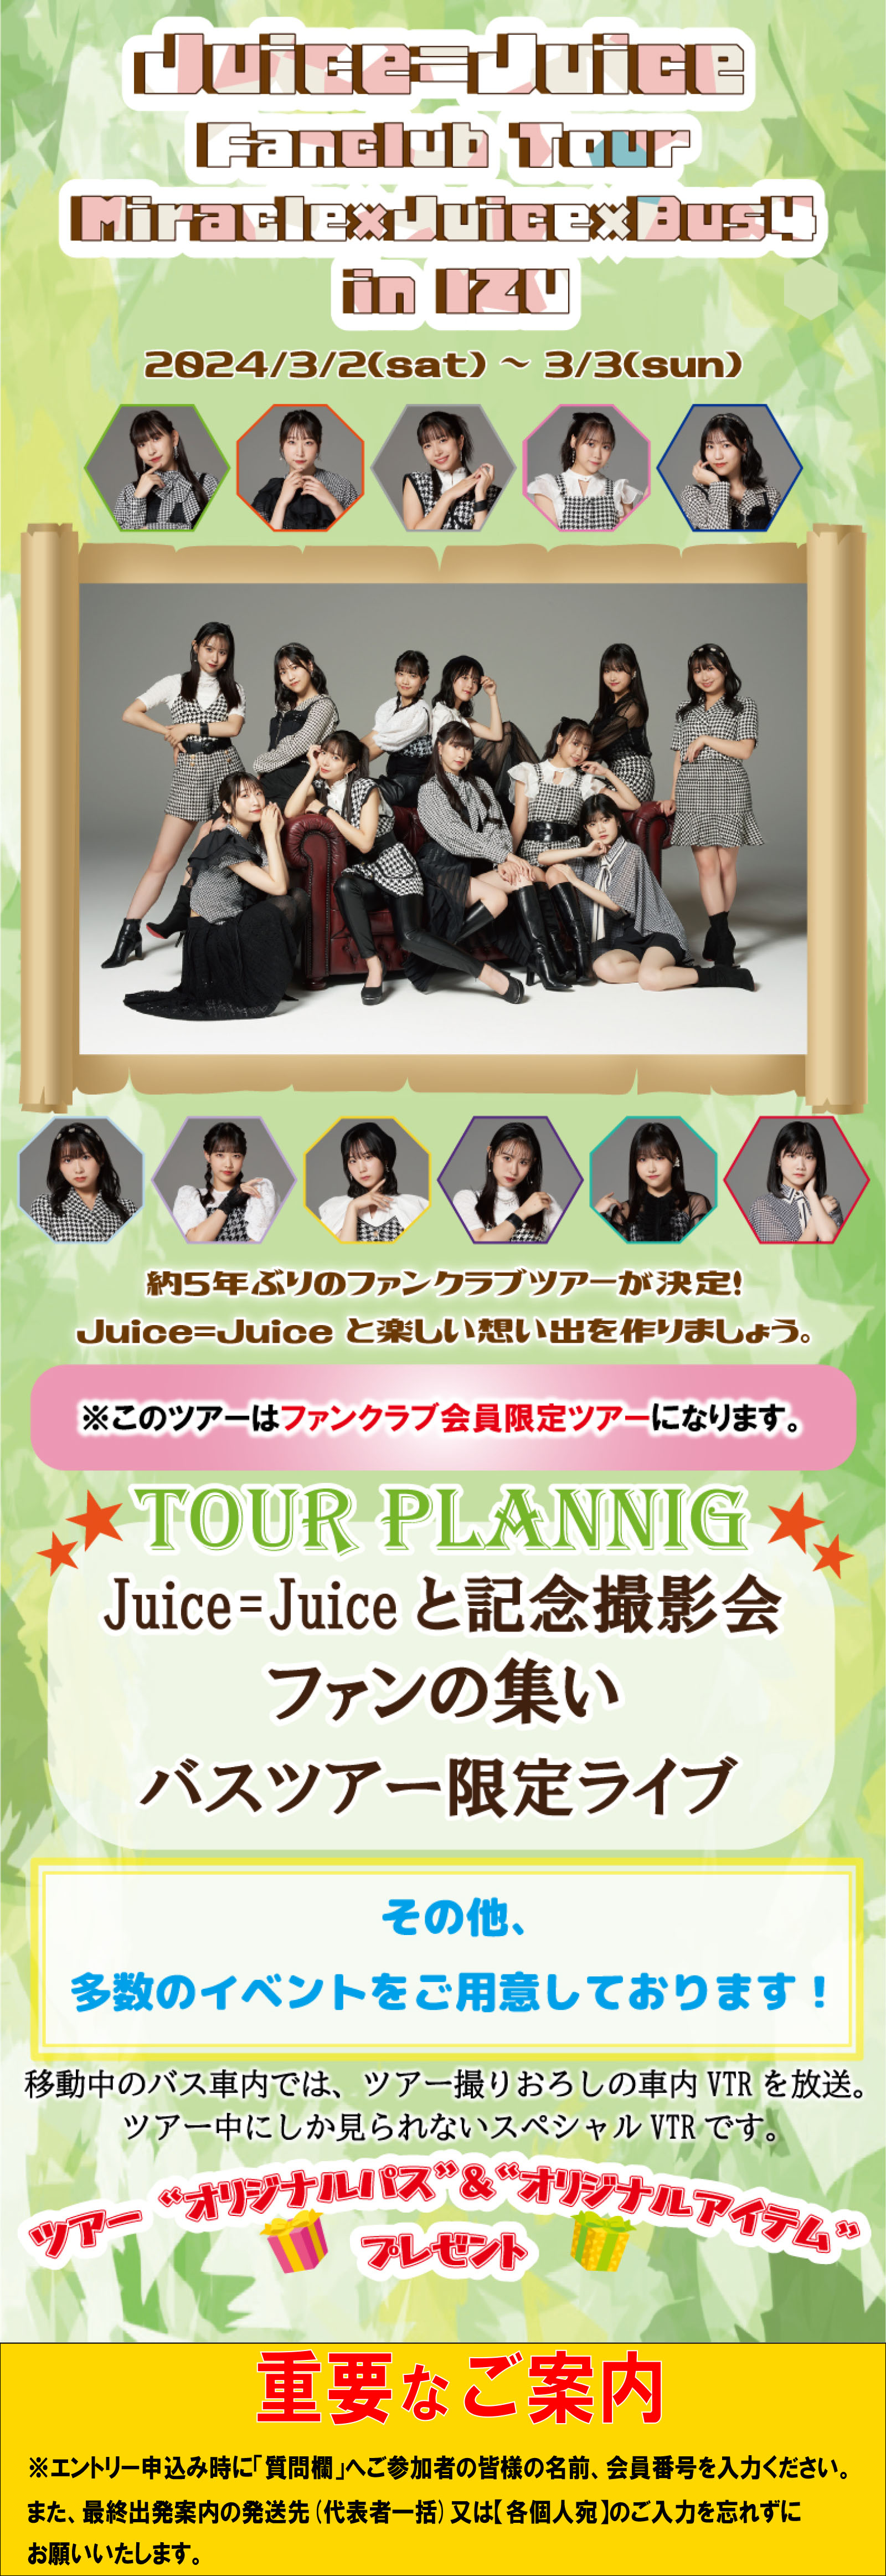 Juice=Juice Fanclub Tour Miracle×Juice×Bus4 in IZU』